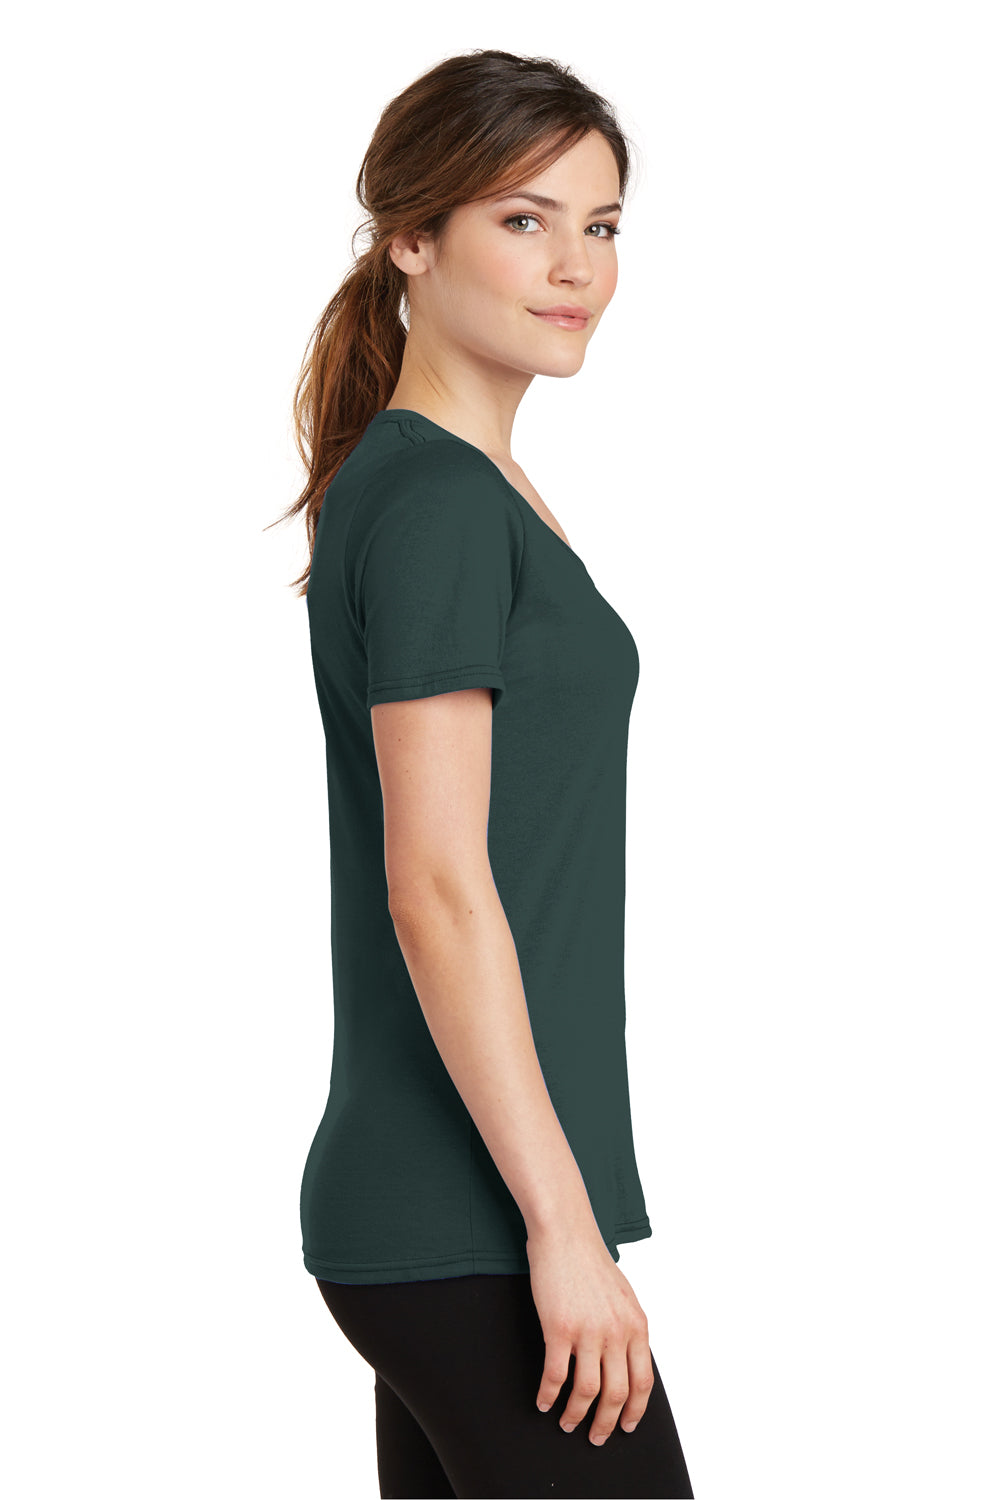 Port & Company LPC381V Womens Dry Zone Performance Moisture Wicking Short Sleeve V-Neck T-Shirt Dark Green Side